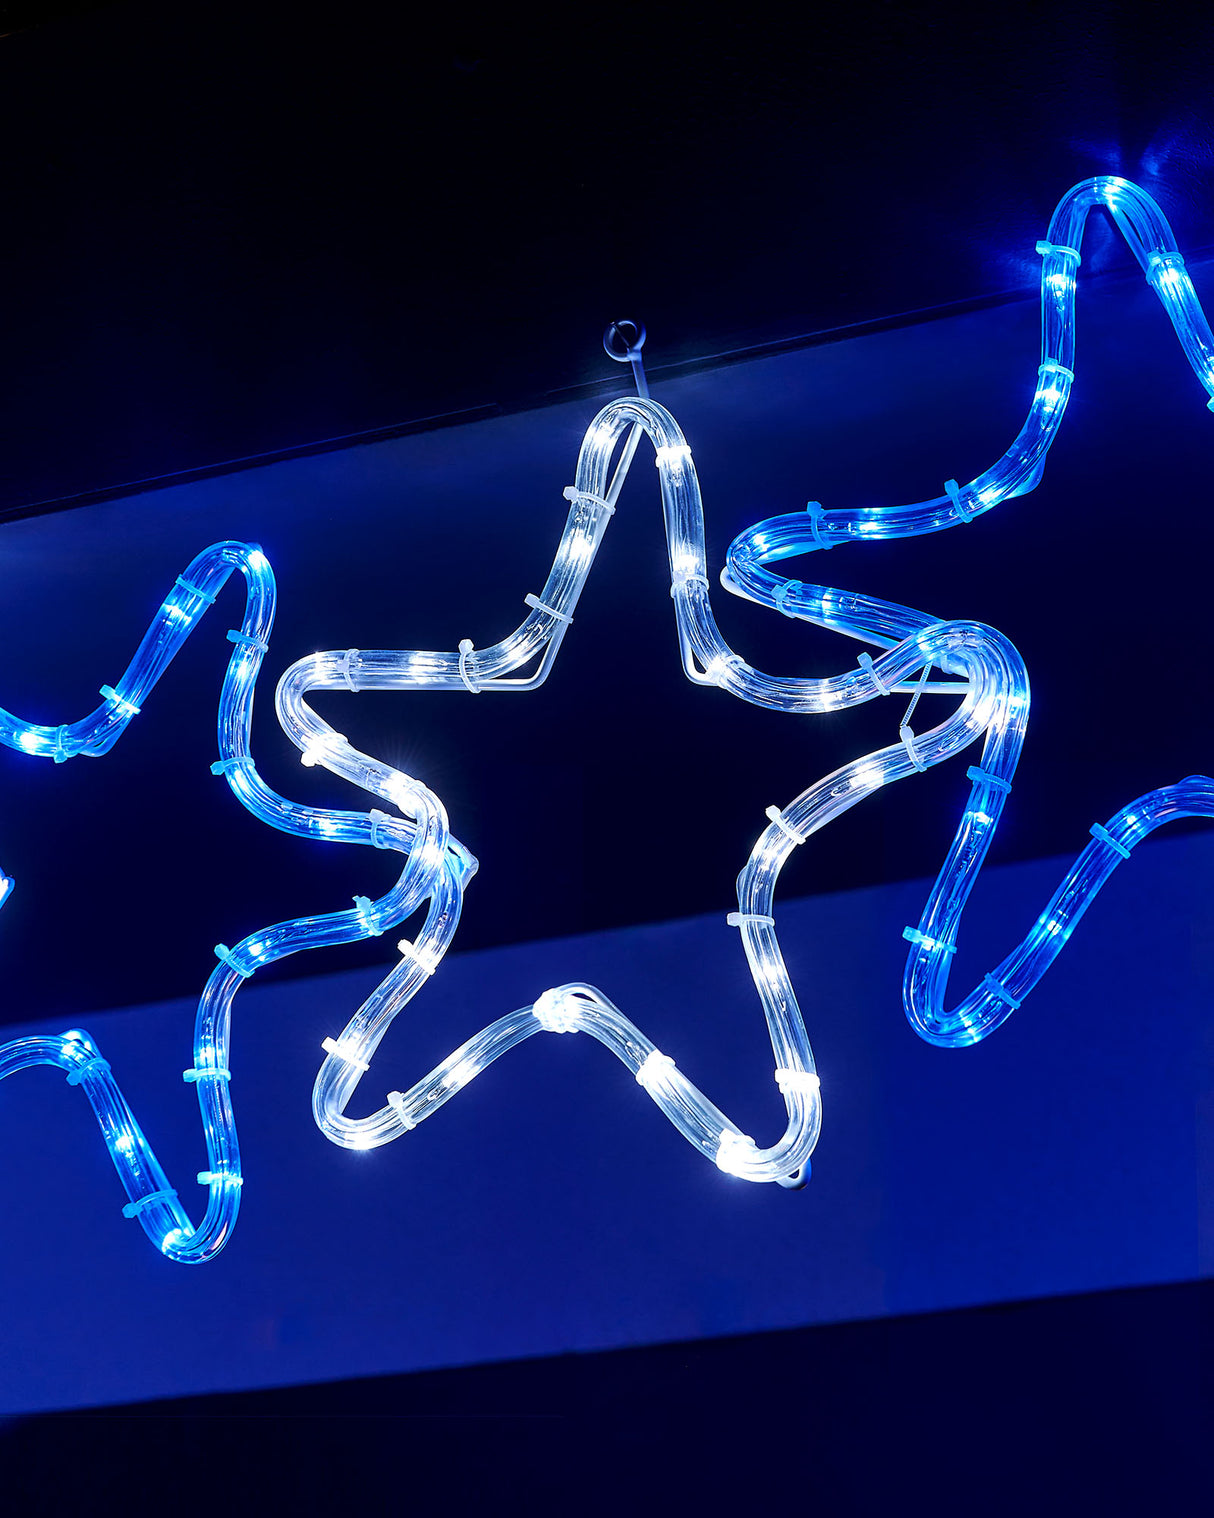 7-Star Motif Rope Light Silhouette, White/Blue, 119 cm